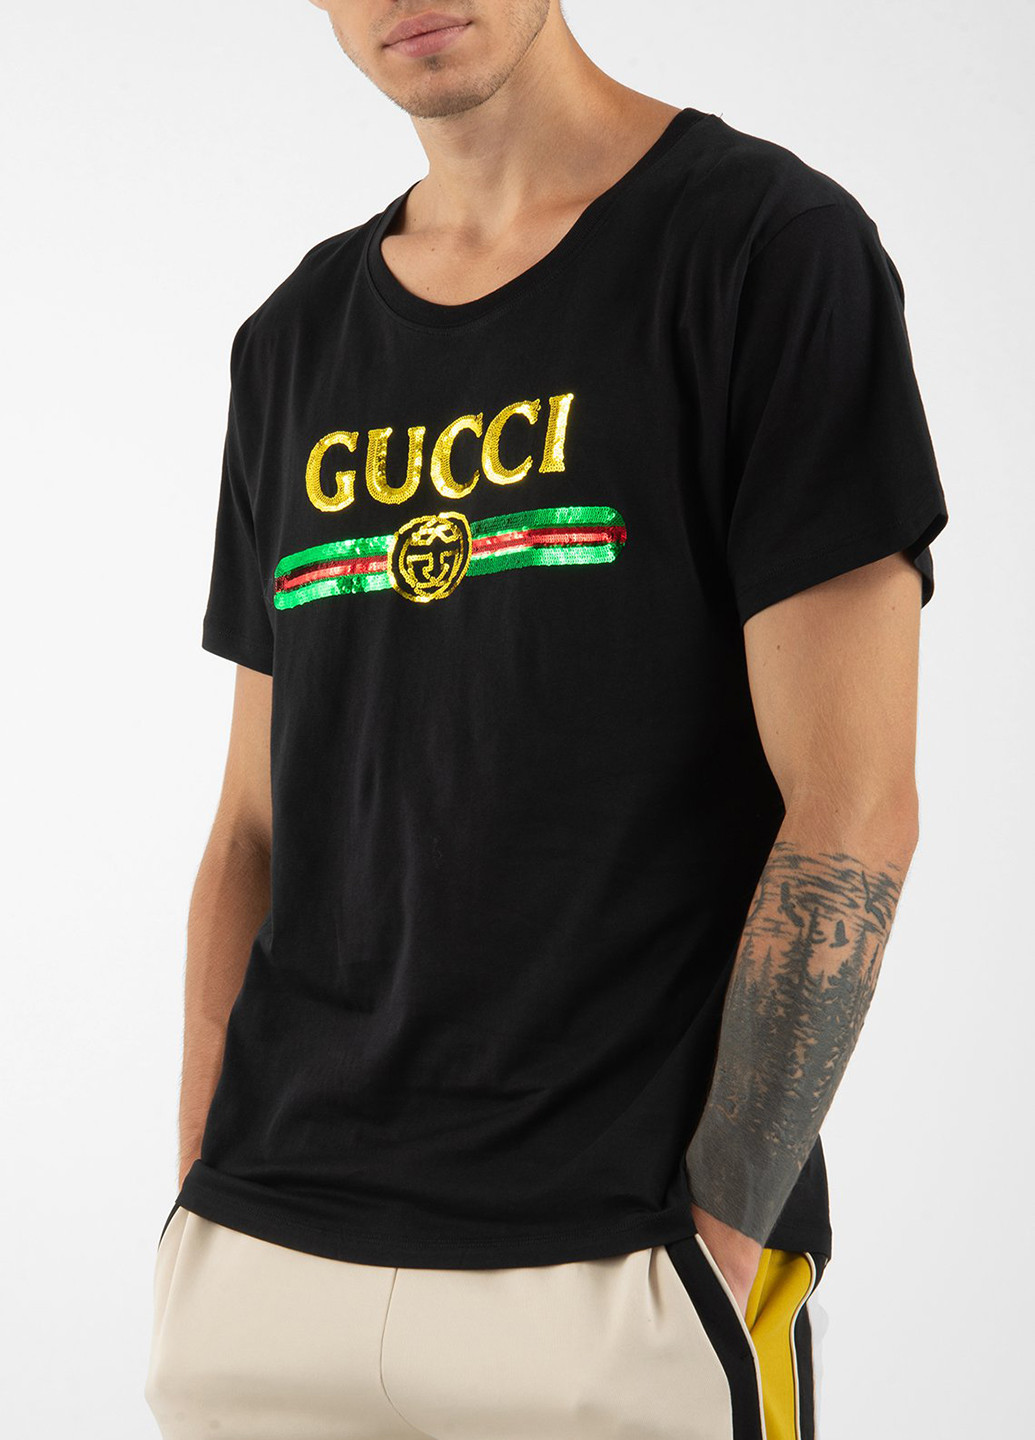 Черная белая футболка marmont hollywood Gucci